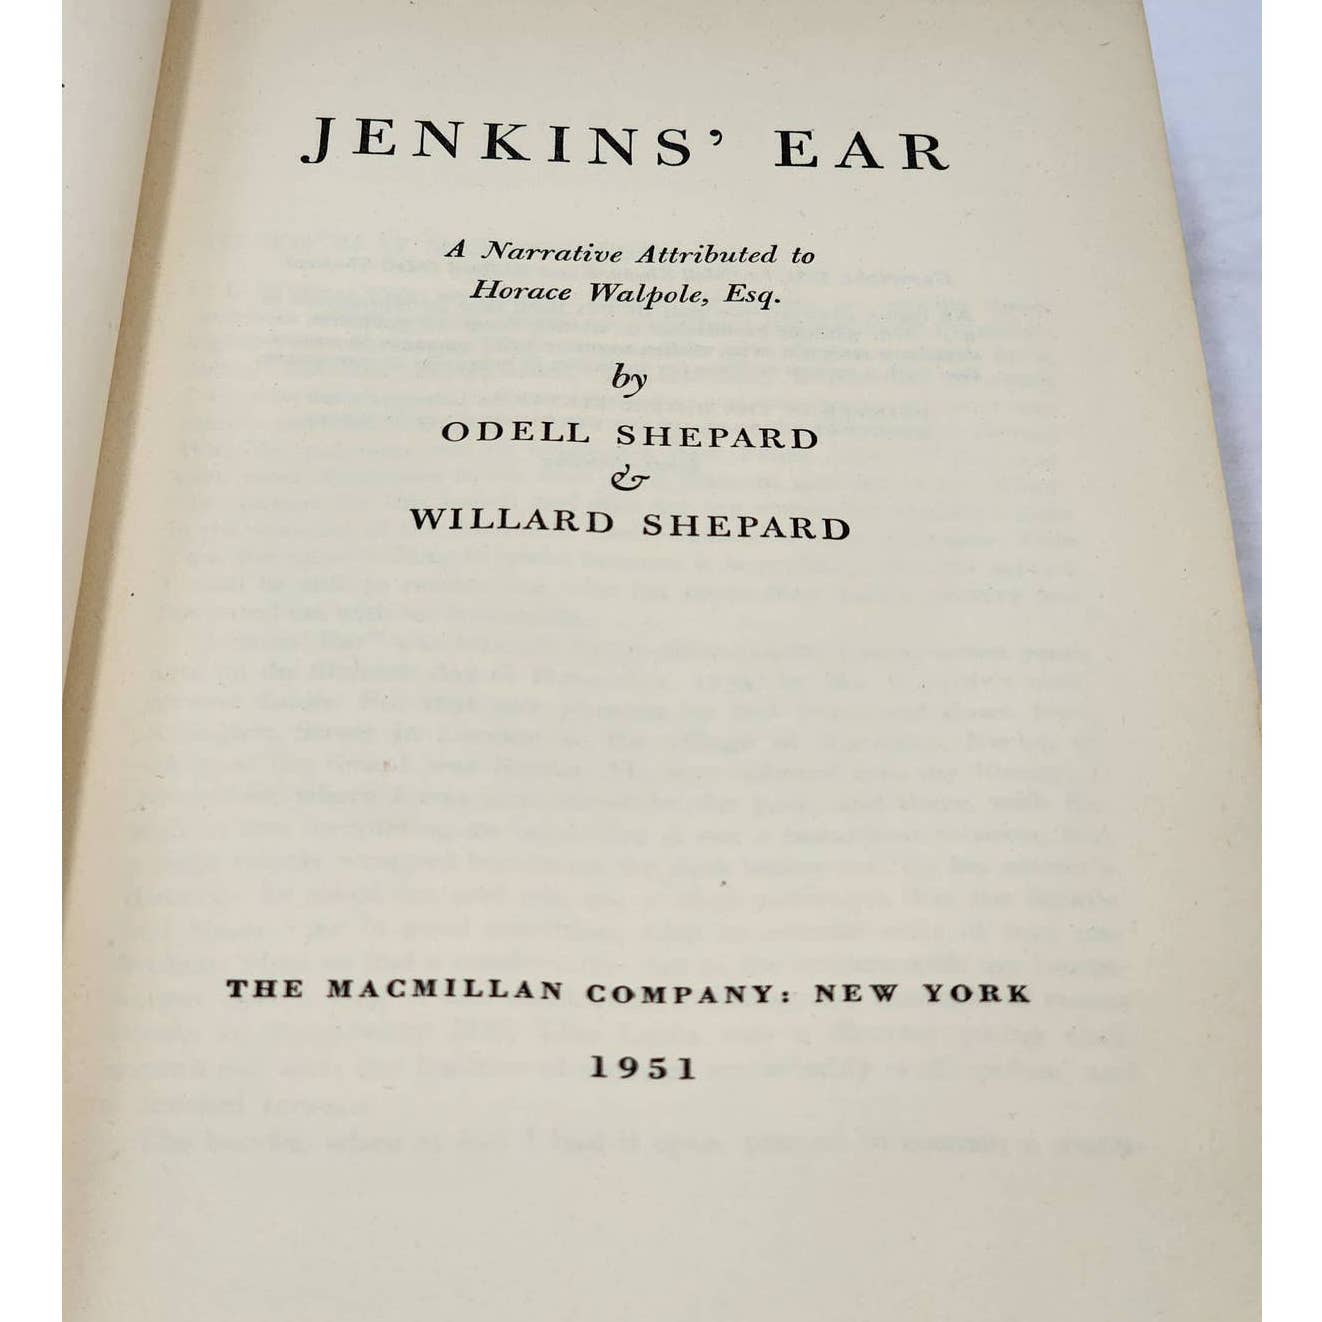 Jenkins Ear By Odell Shepard And Willard Shepard First Printing 1951